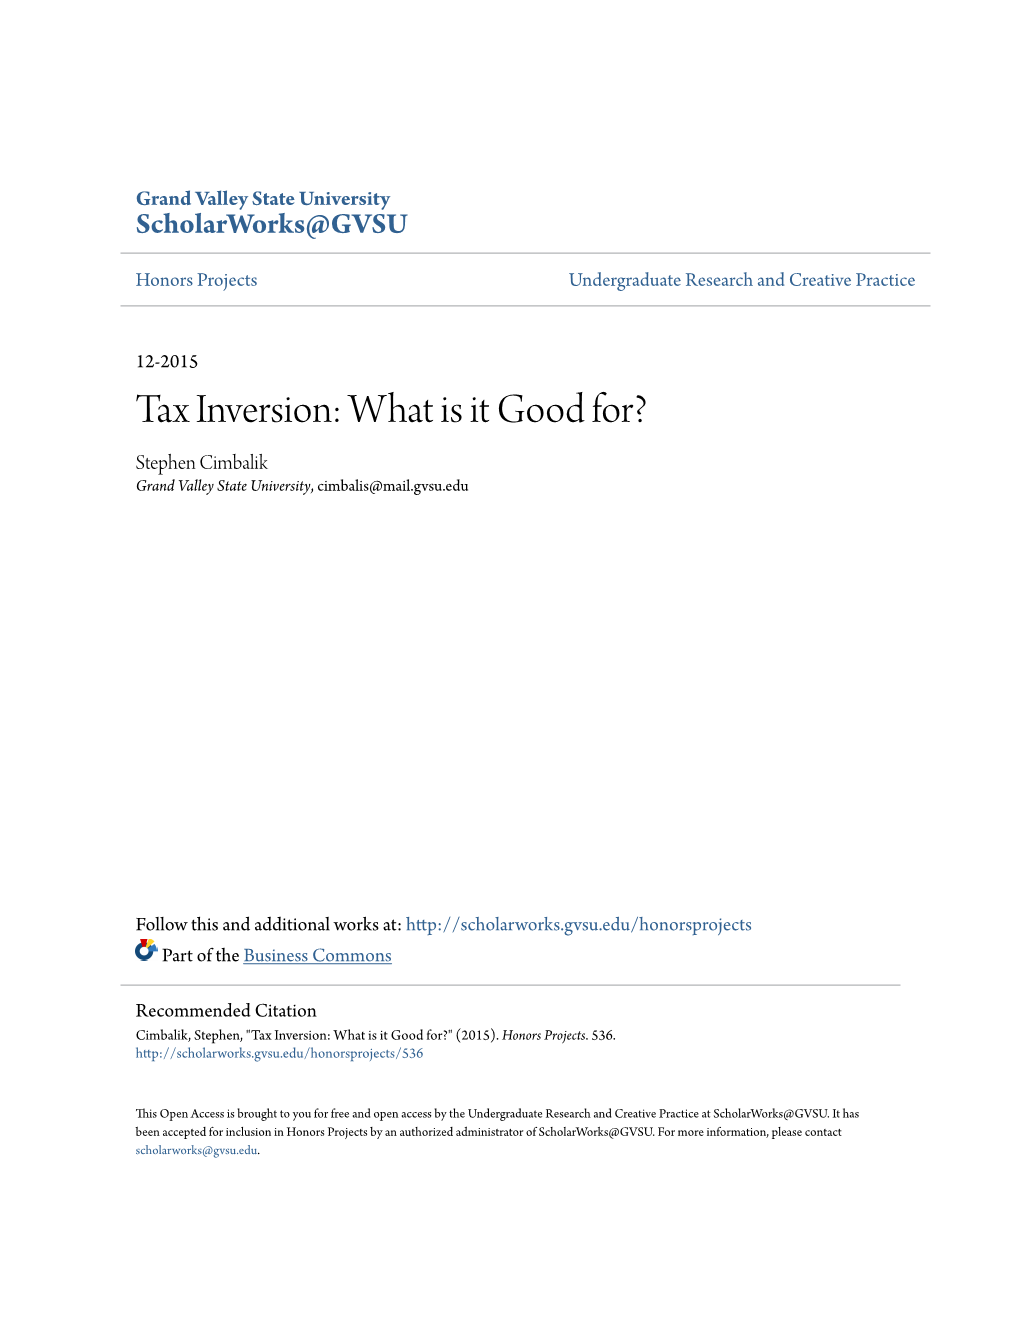 Tax Inversion: What Is It Good For? Stephen Cimbalik Grand Valley State University, Cimbalis@Mail.Gvsu.Edu